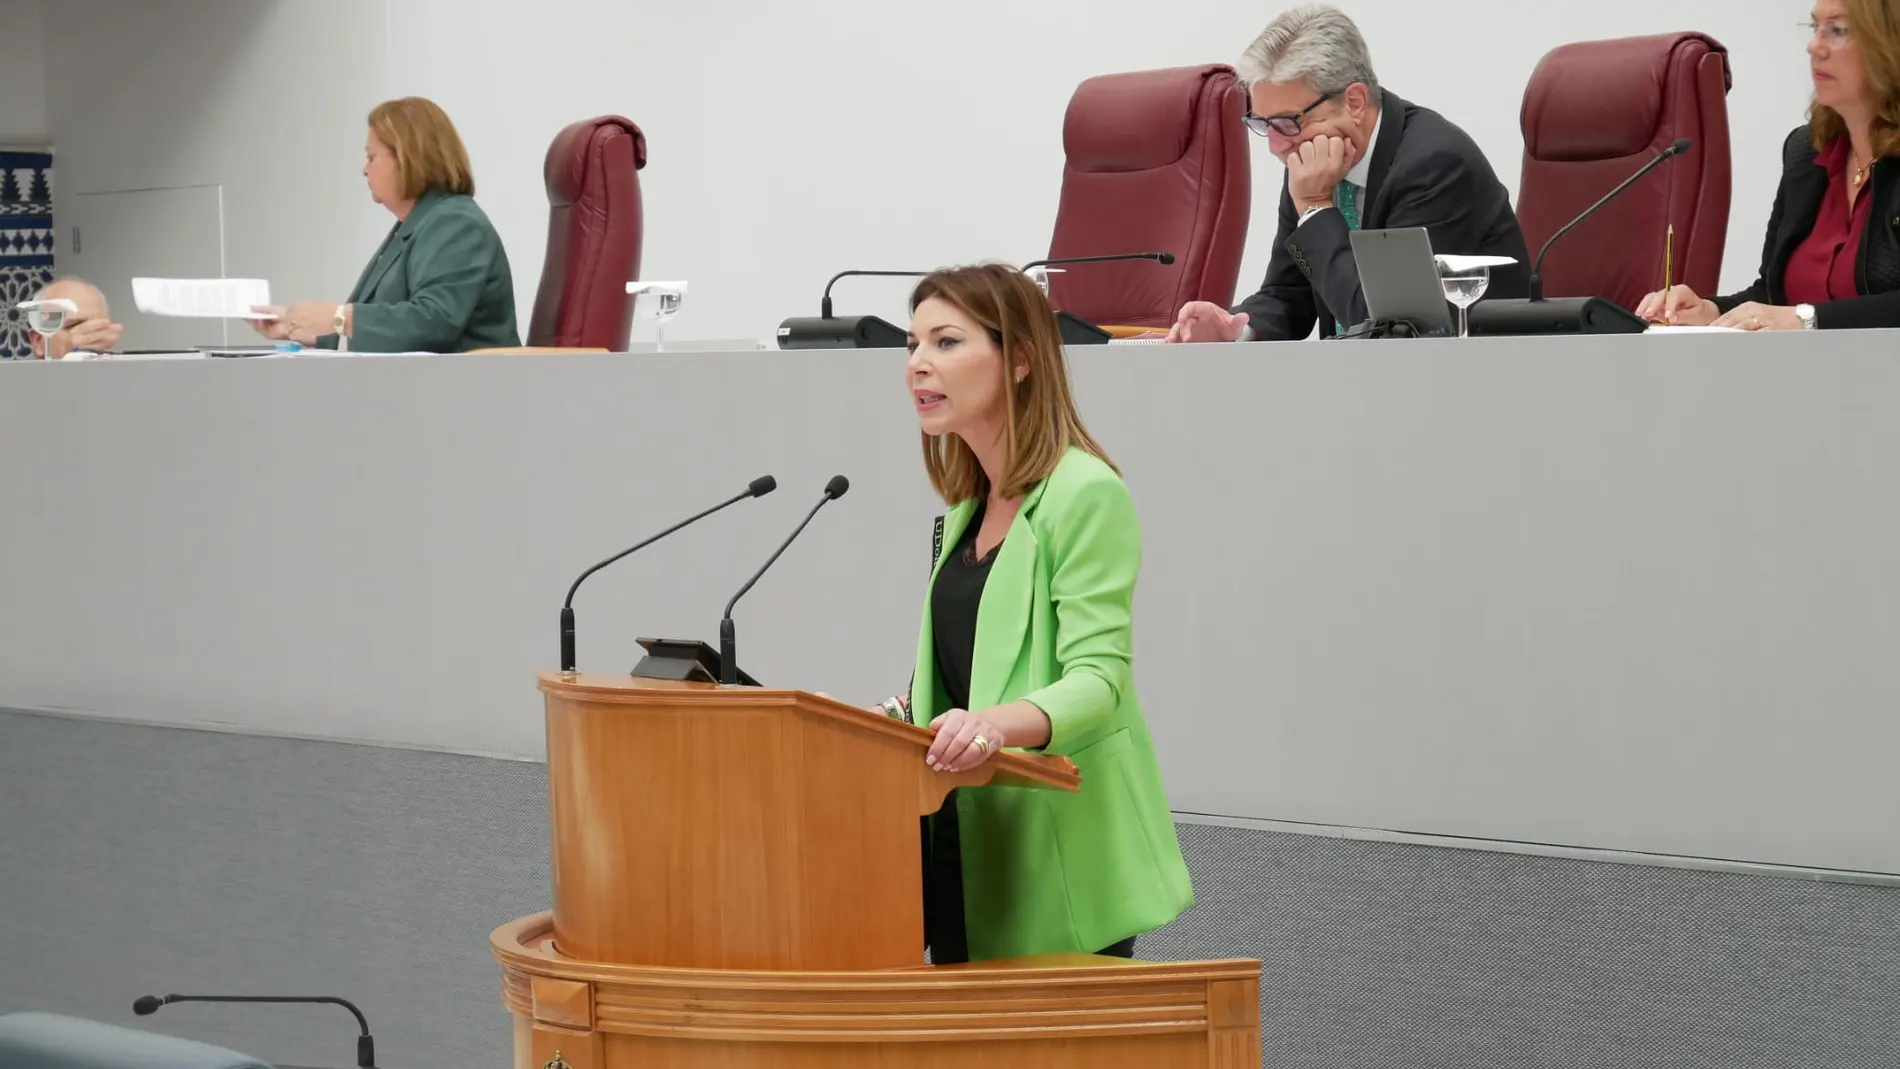 La diputada regional del Partido Popular en la Asamblea Regional, Mari Carmen Ruiz Jódar